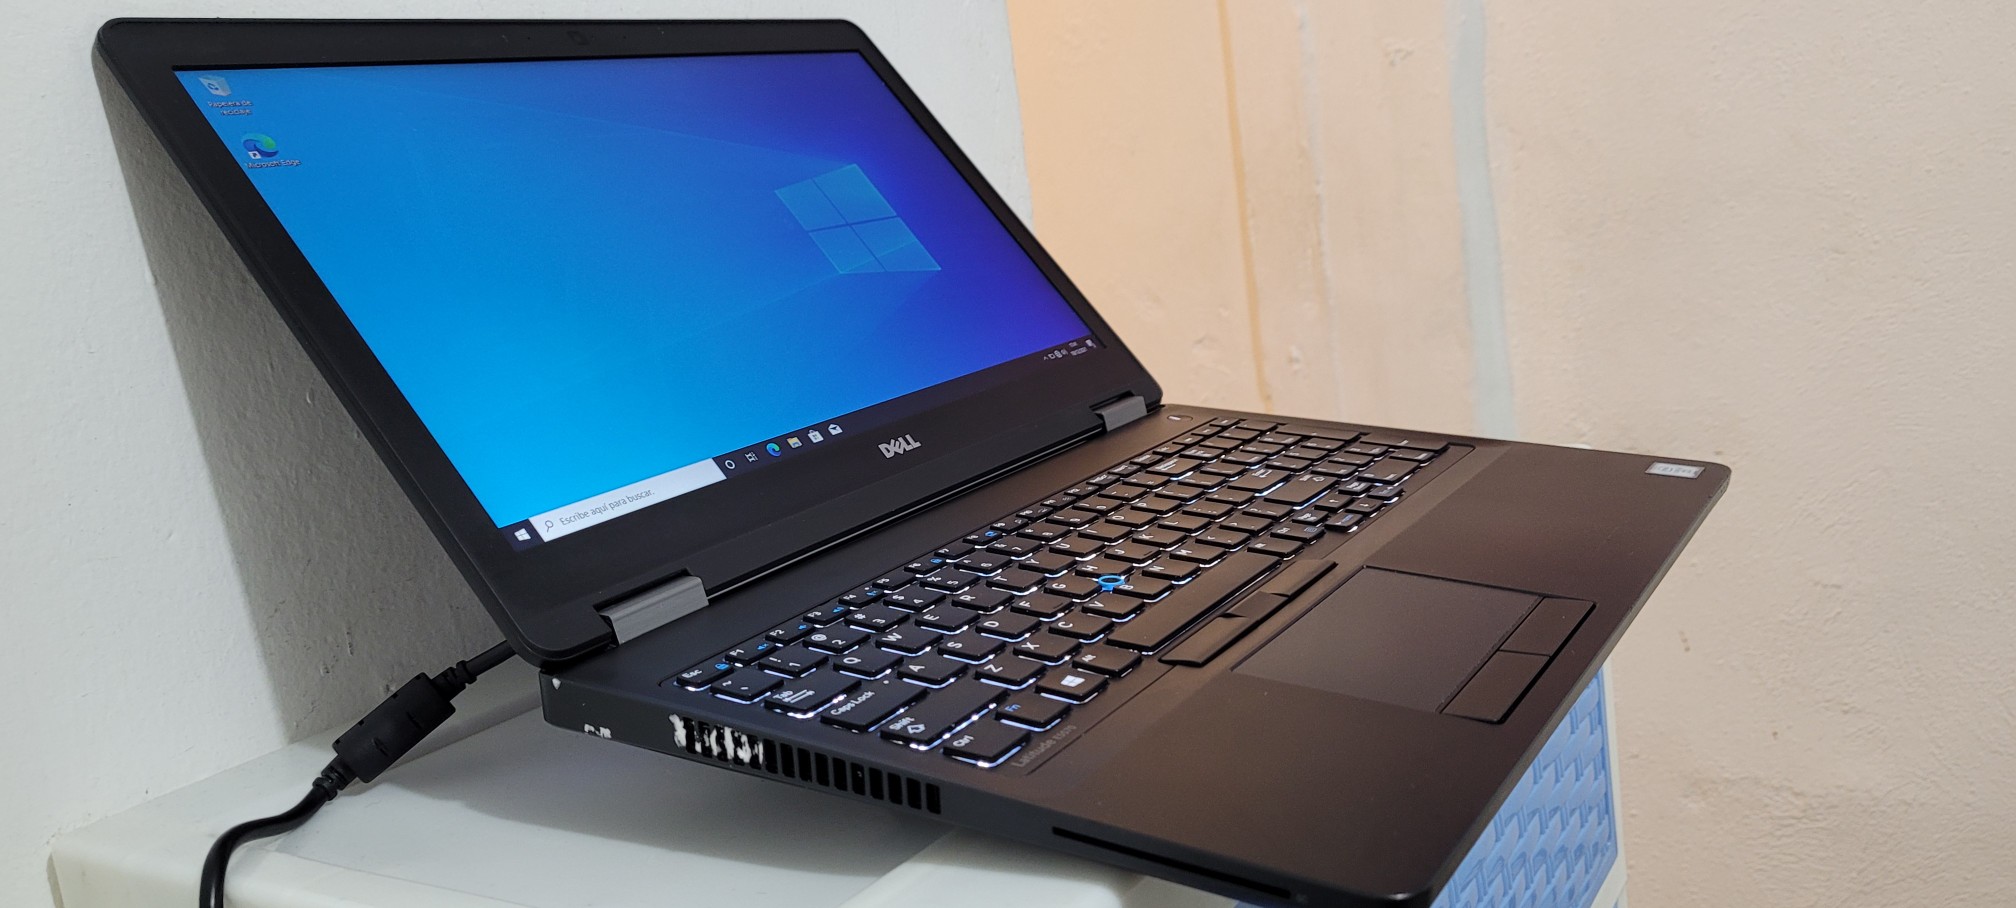 computadoras y laptops - Laptop Dell 17 Pulg Core i7 Ram 12gb Disco 256gb SSD Video 6gb 1